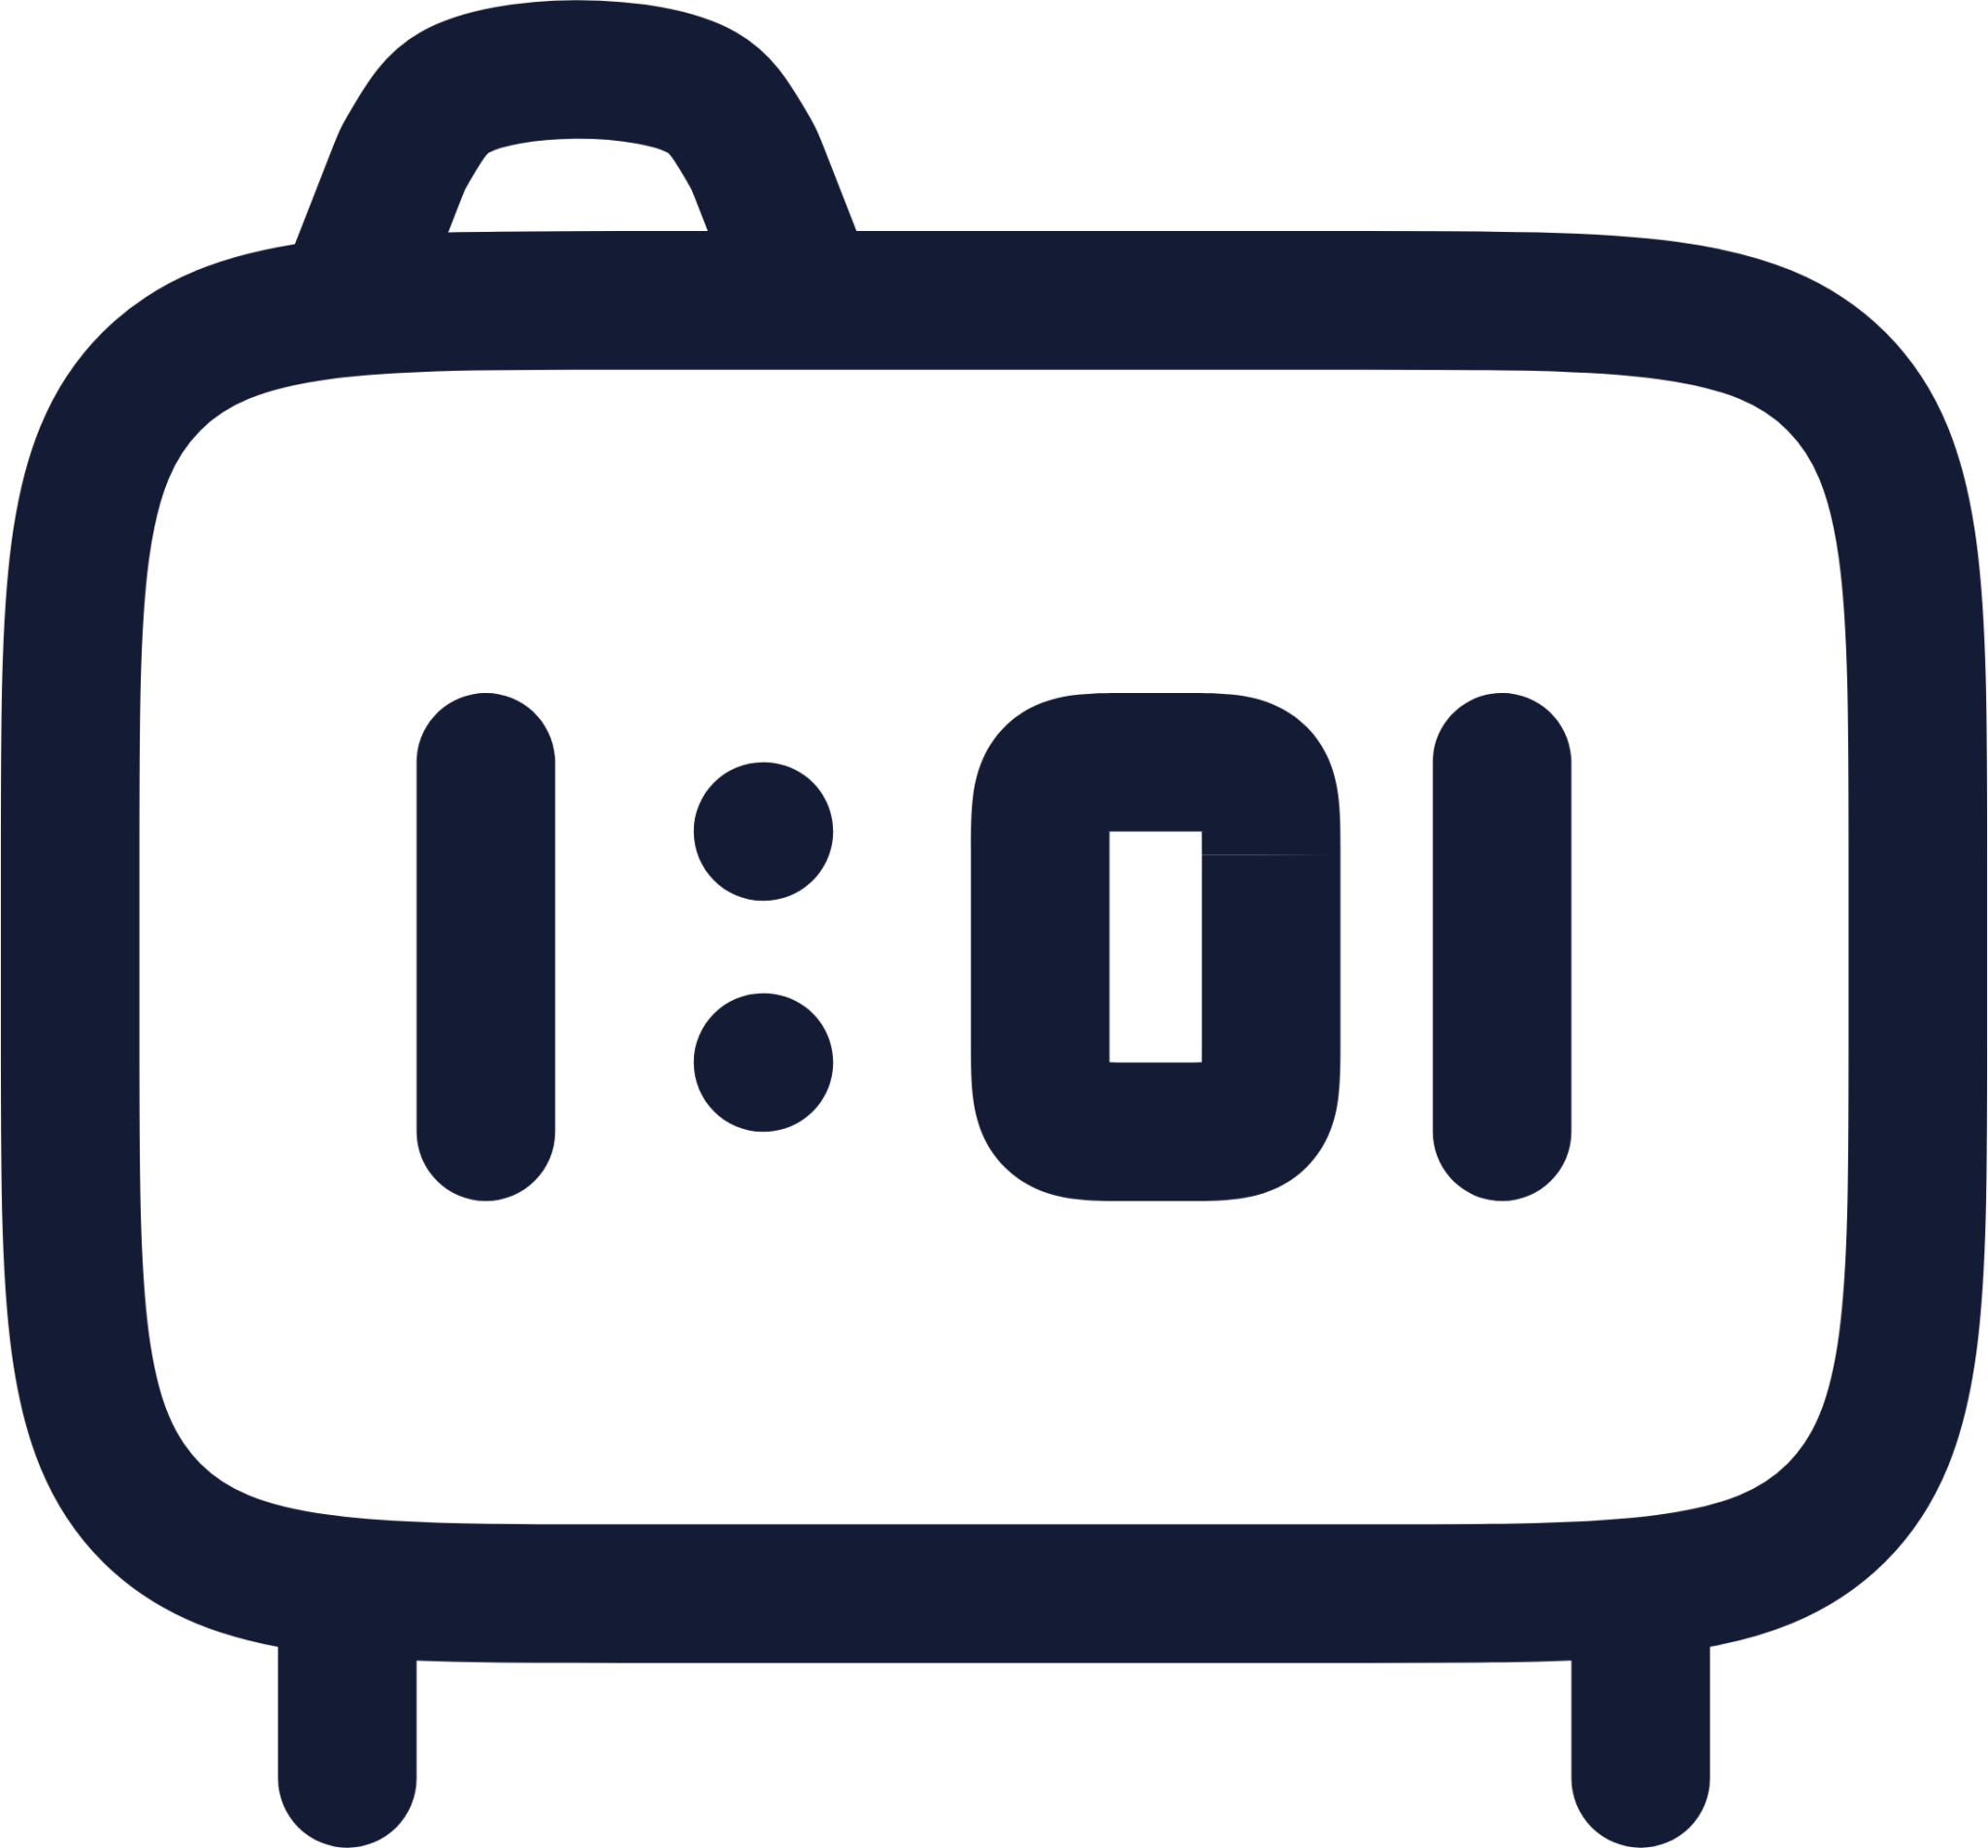 digital clock icon